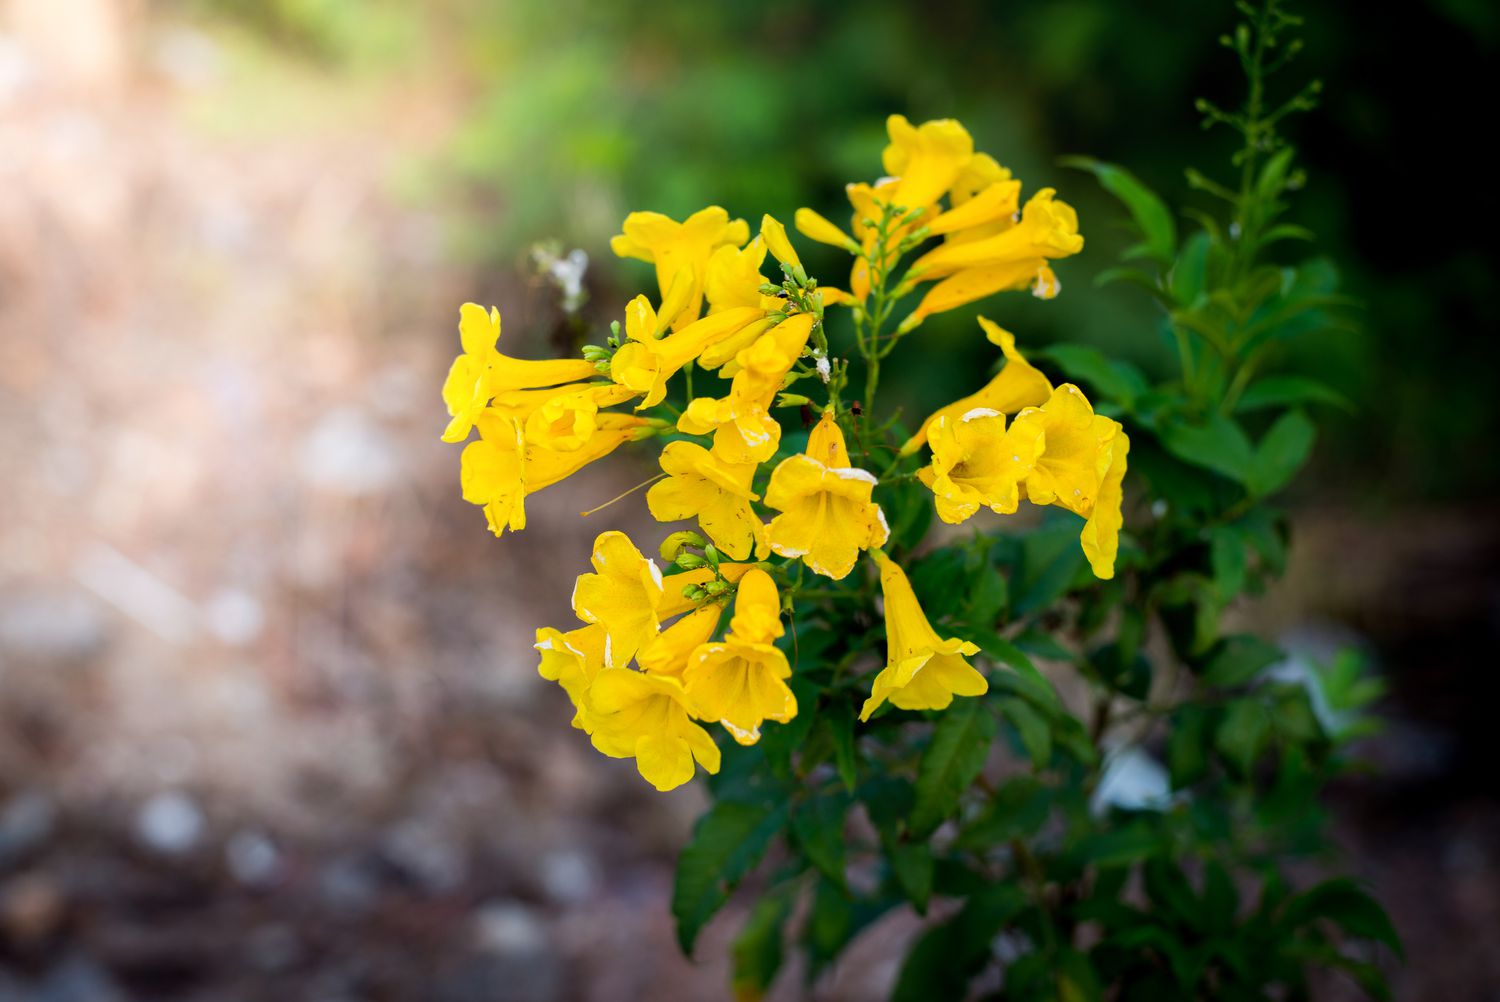 Yellow bells flower (Tecoma stans)